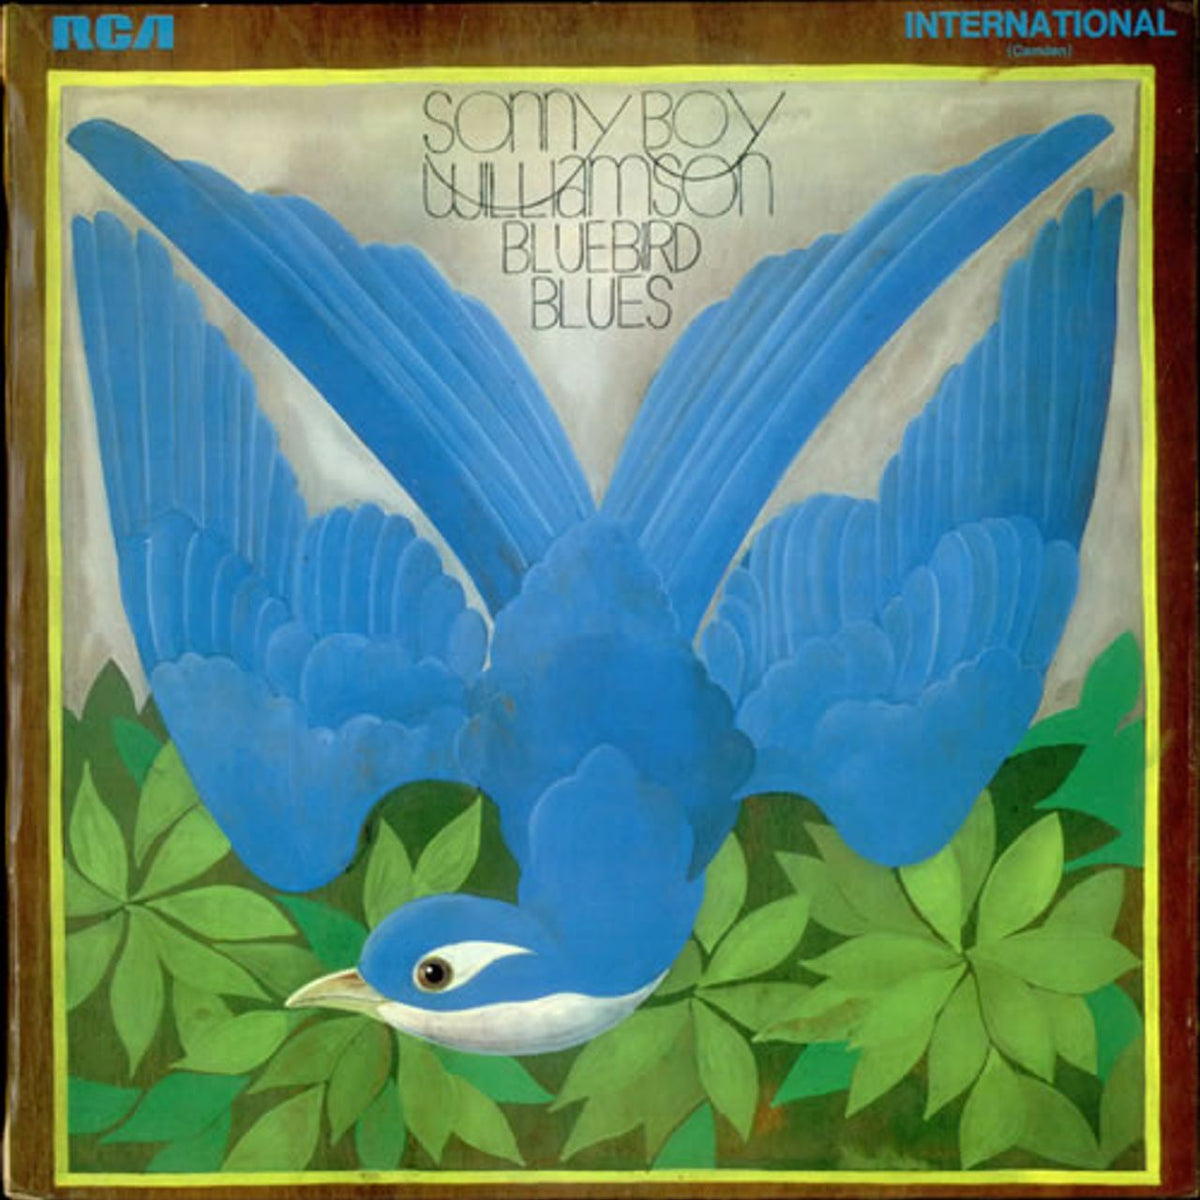 Sonny Boy Williamson Bluebird Blues UK Vinyl LP — RareVinyl.com